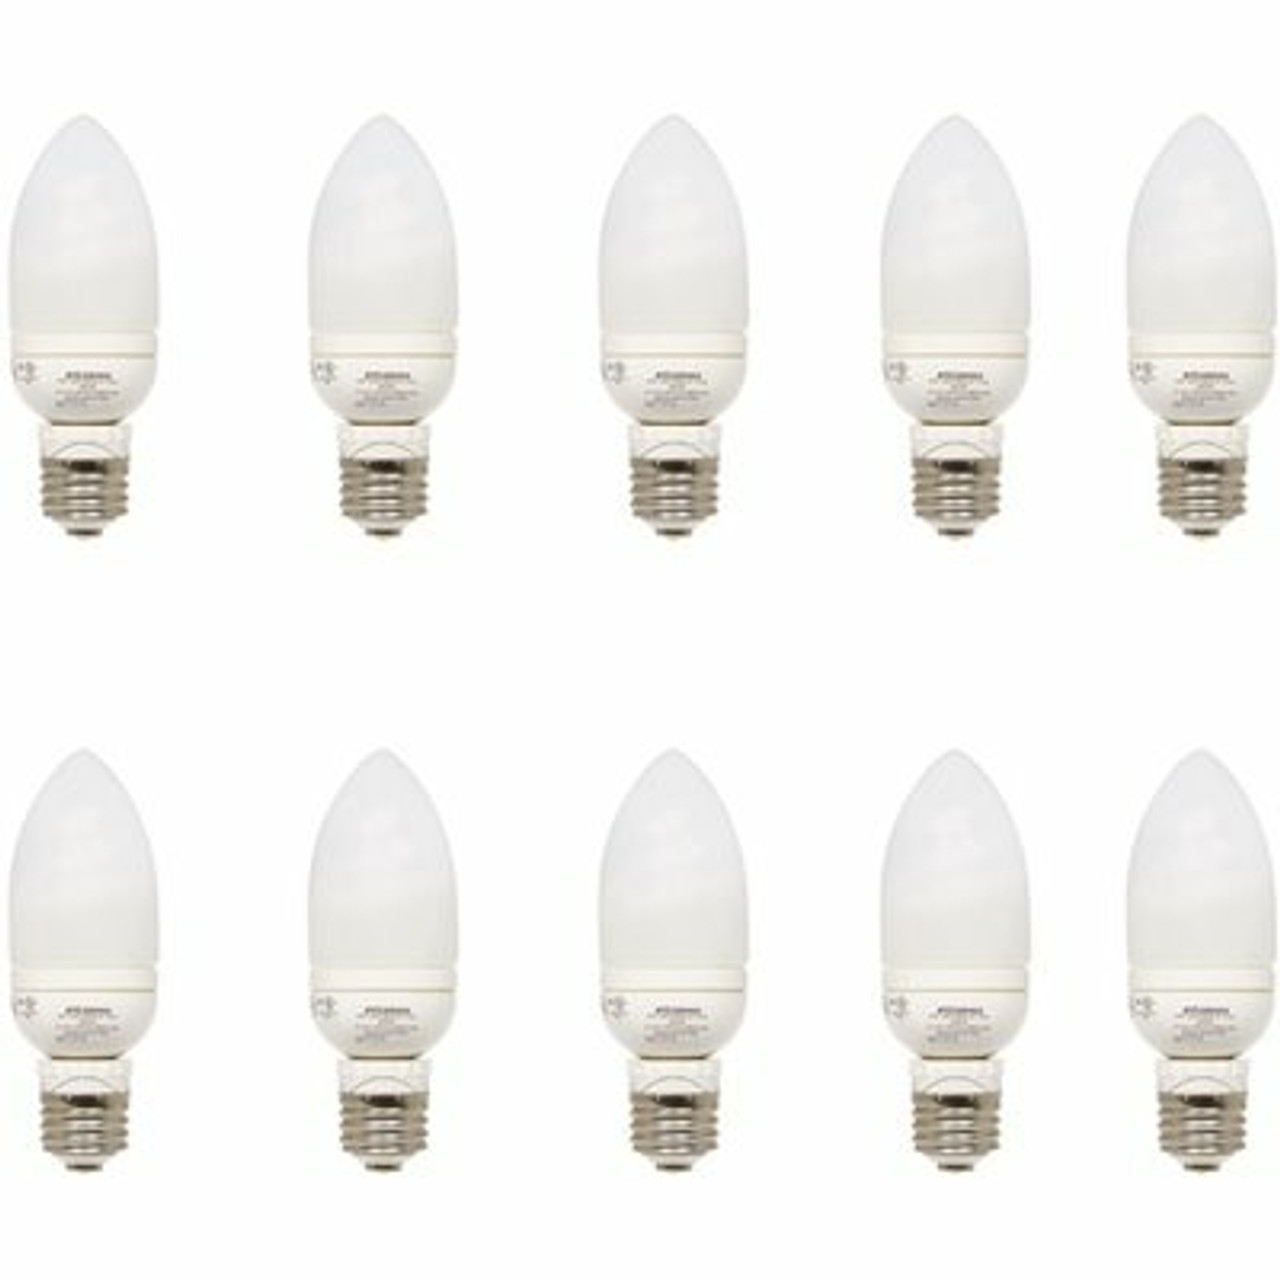 Sylvania 40-Watt Equivalent B10 Energy Saving Decorative Cfl Light Bulb Warm White (10-Pack)